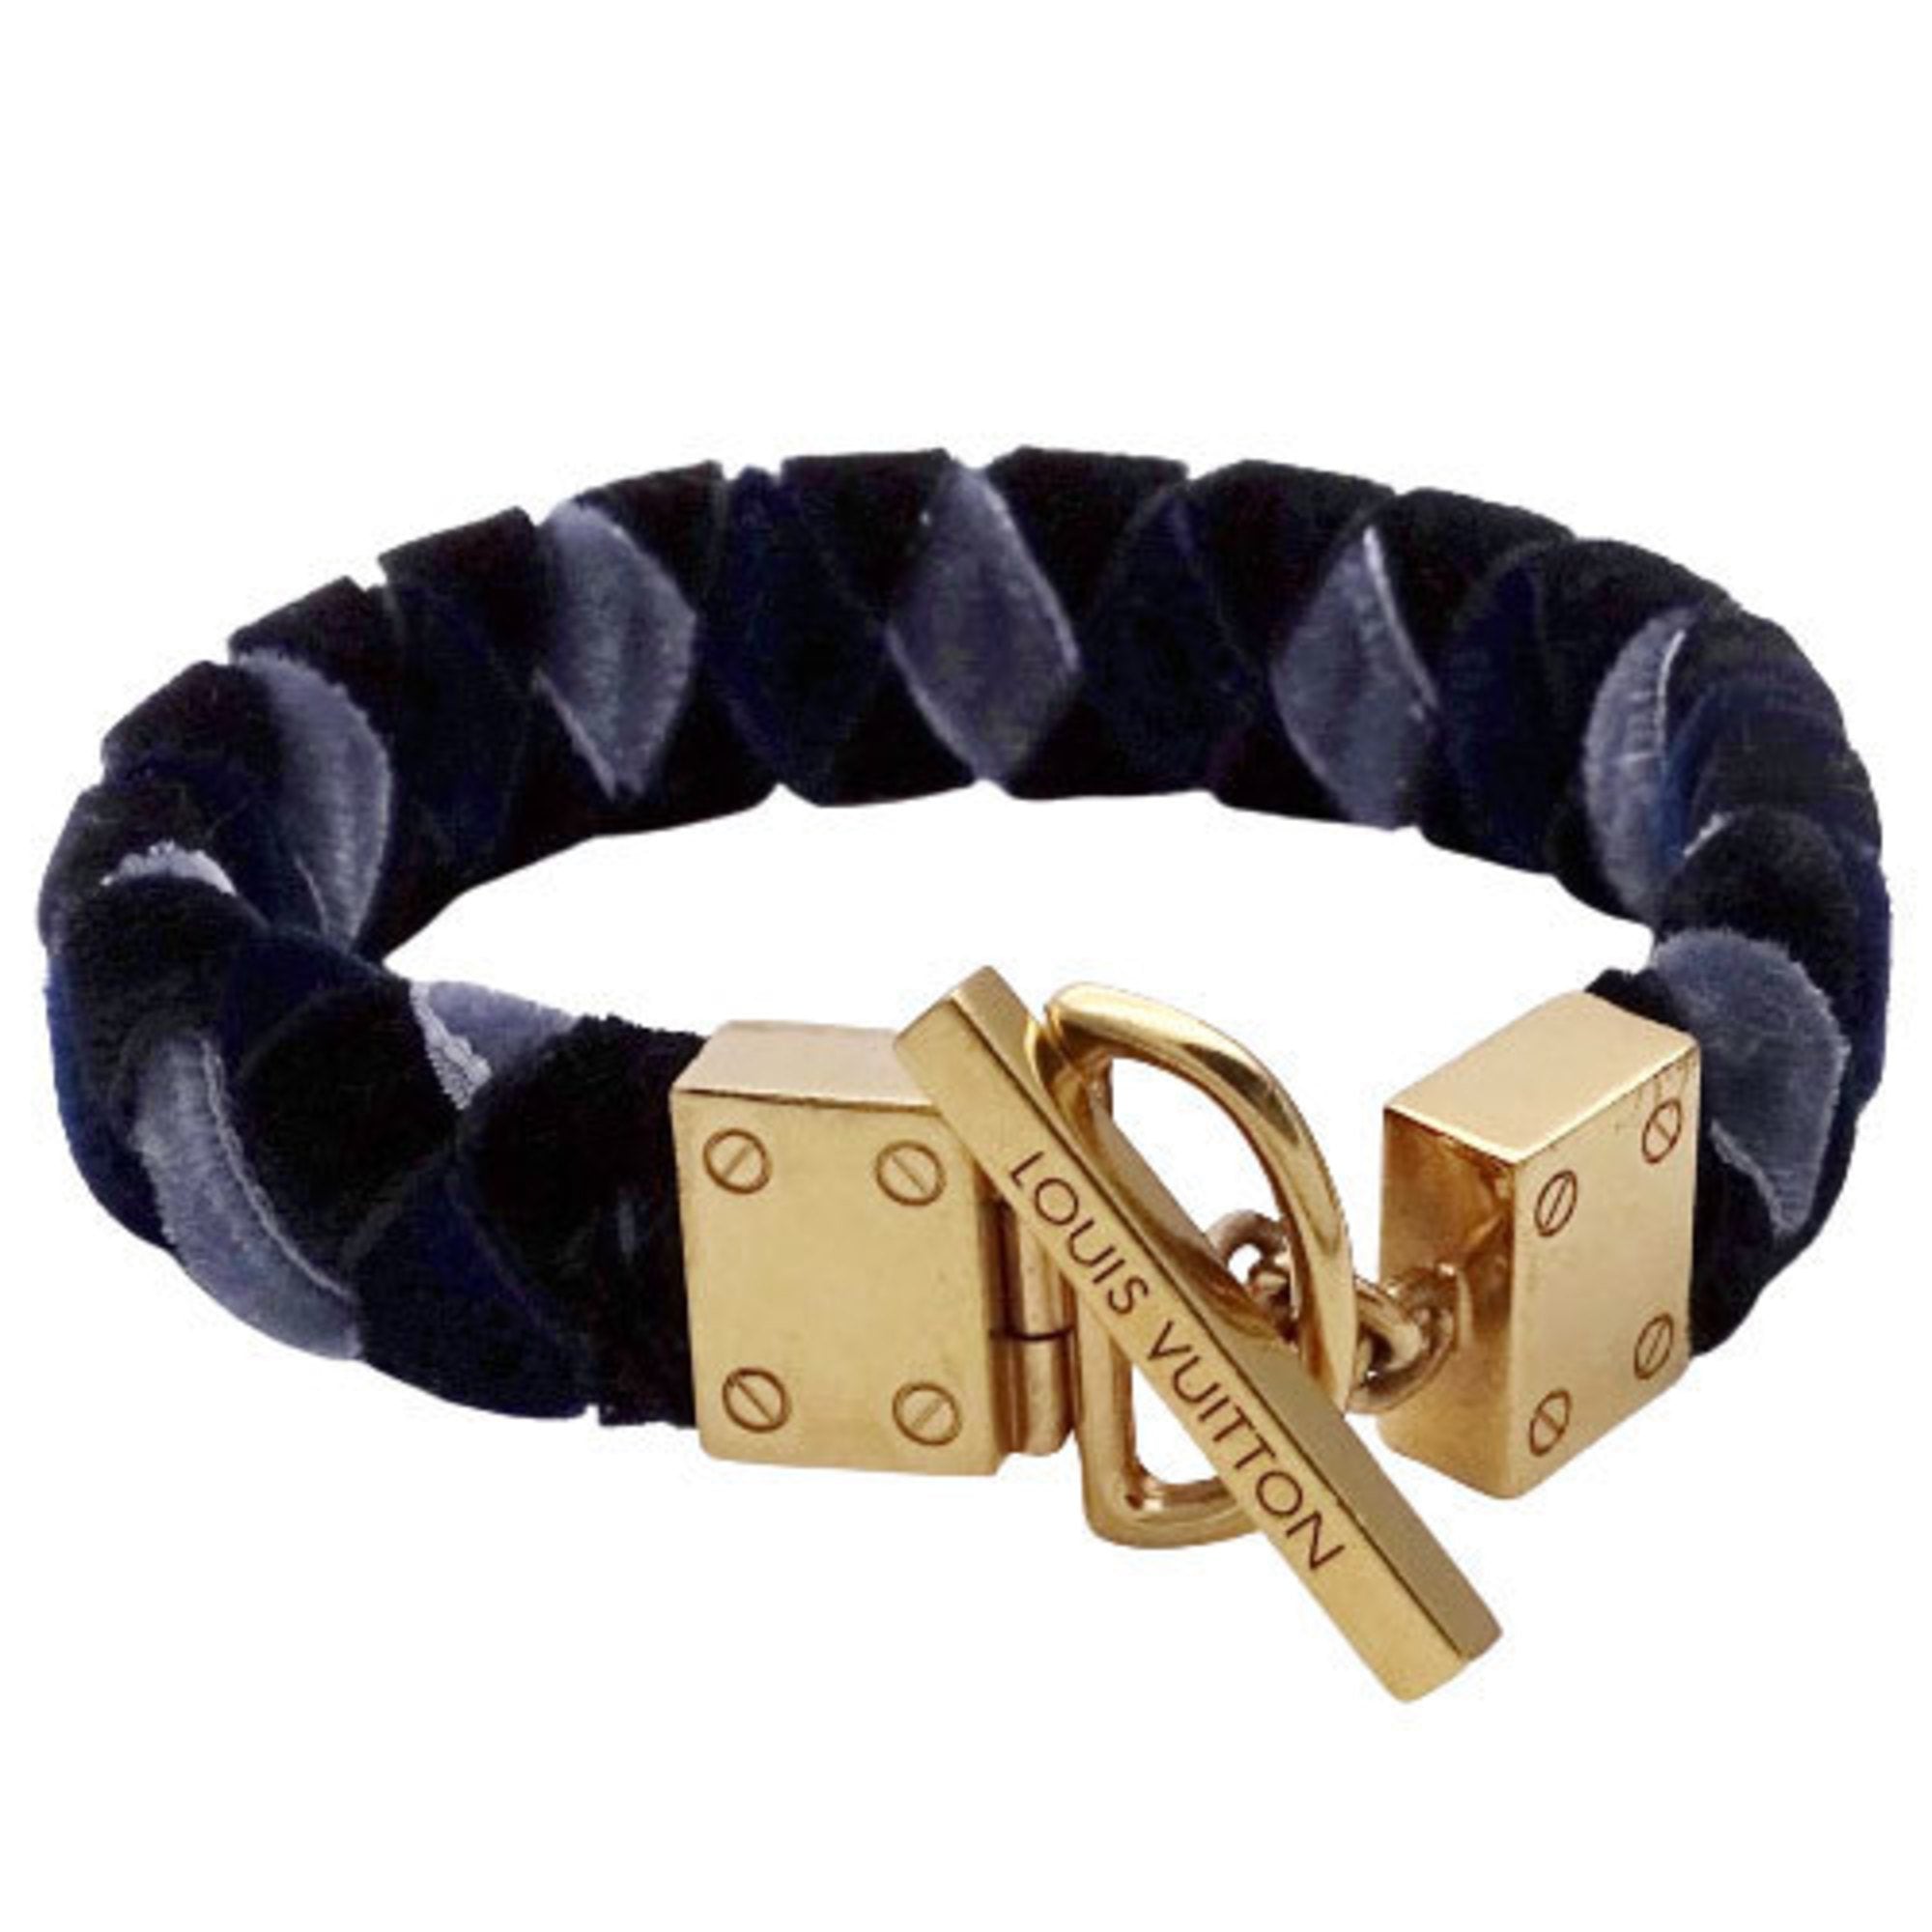 Louis Vuitton bracelet men gap Dis velor gold black gray navy